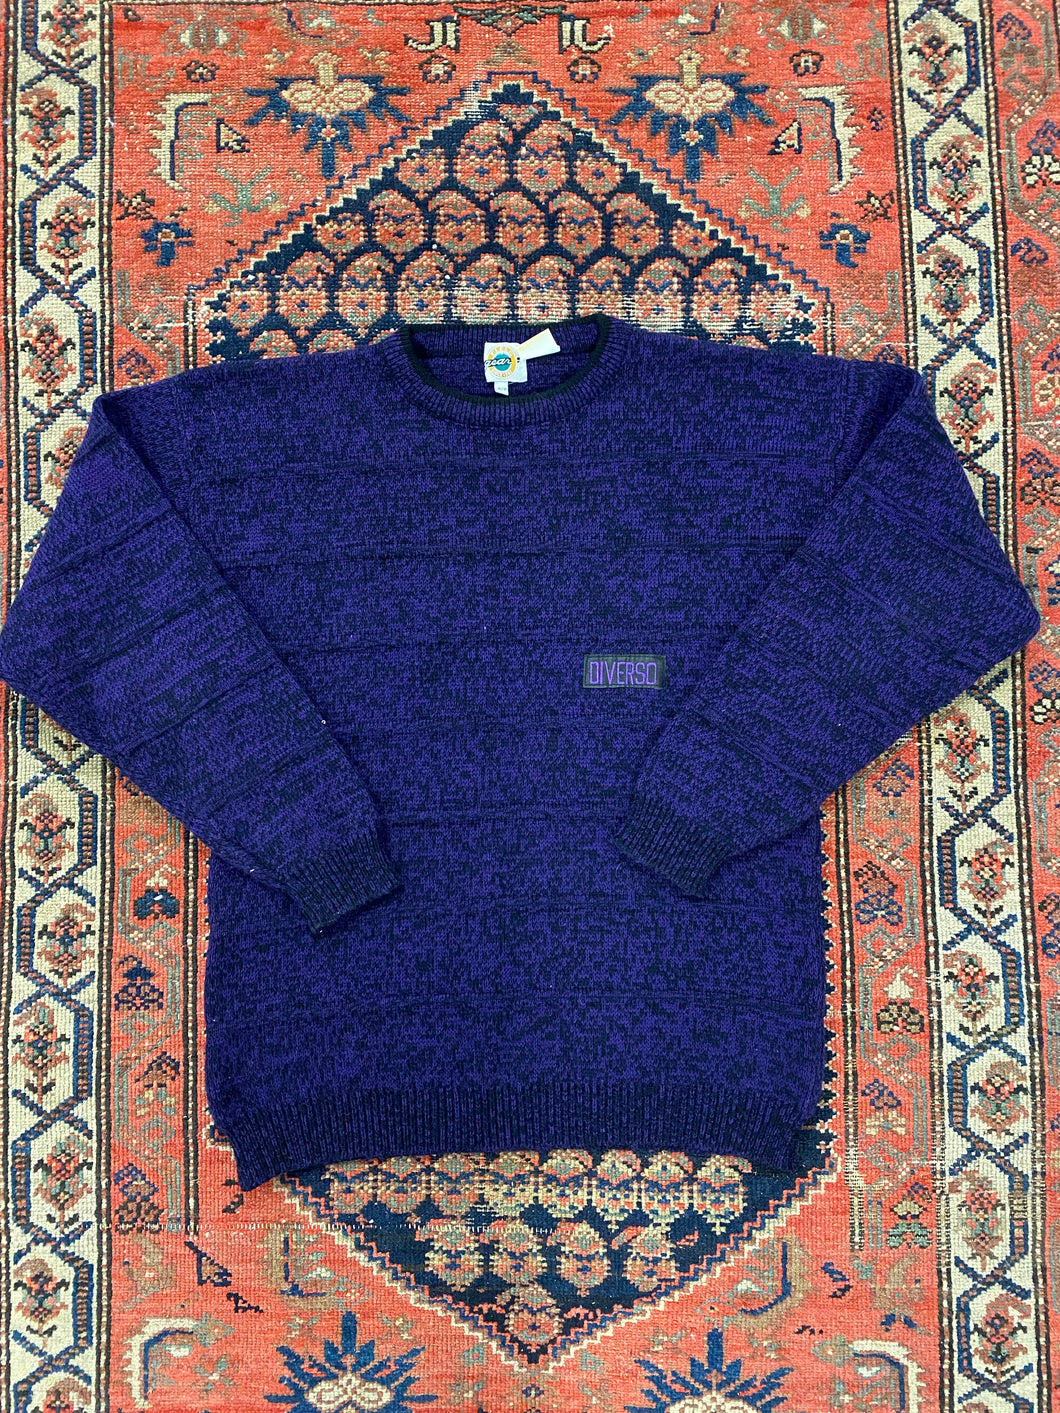 90s Purple Knit Sweater - M